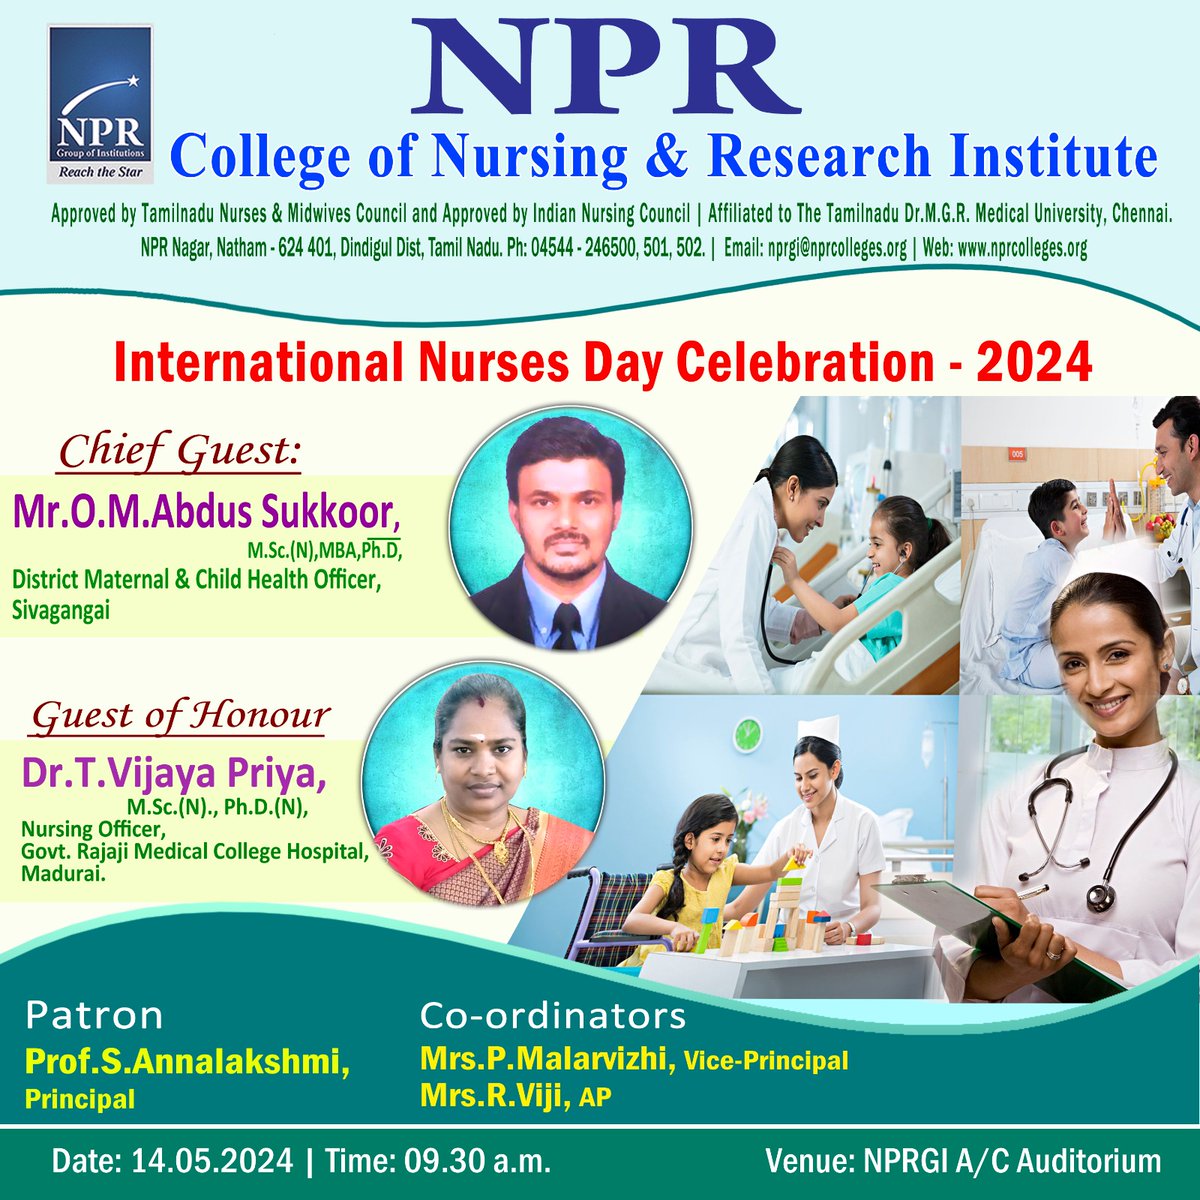 International Nurses Day Celebration - 2024

#NPRGI #NPR #NPRCOLLEGE #NPRNATHAM #NPRASC #NPRCET #NPRPC #NPRNRI #NPRAHS #AUTONOMOUS #NBA #NAAC #ISO #2F #UGC #MKU  #ANNAUNIVERSITY #AICTE #MOU #INNOVATIONCELL #INSTITUTIONINNOVATIONCOUNCIL #INTERNATIONALNURSESDAY